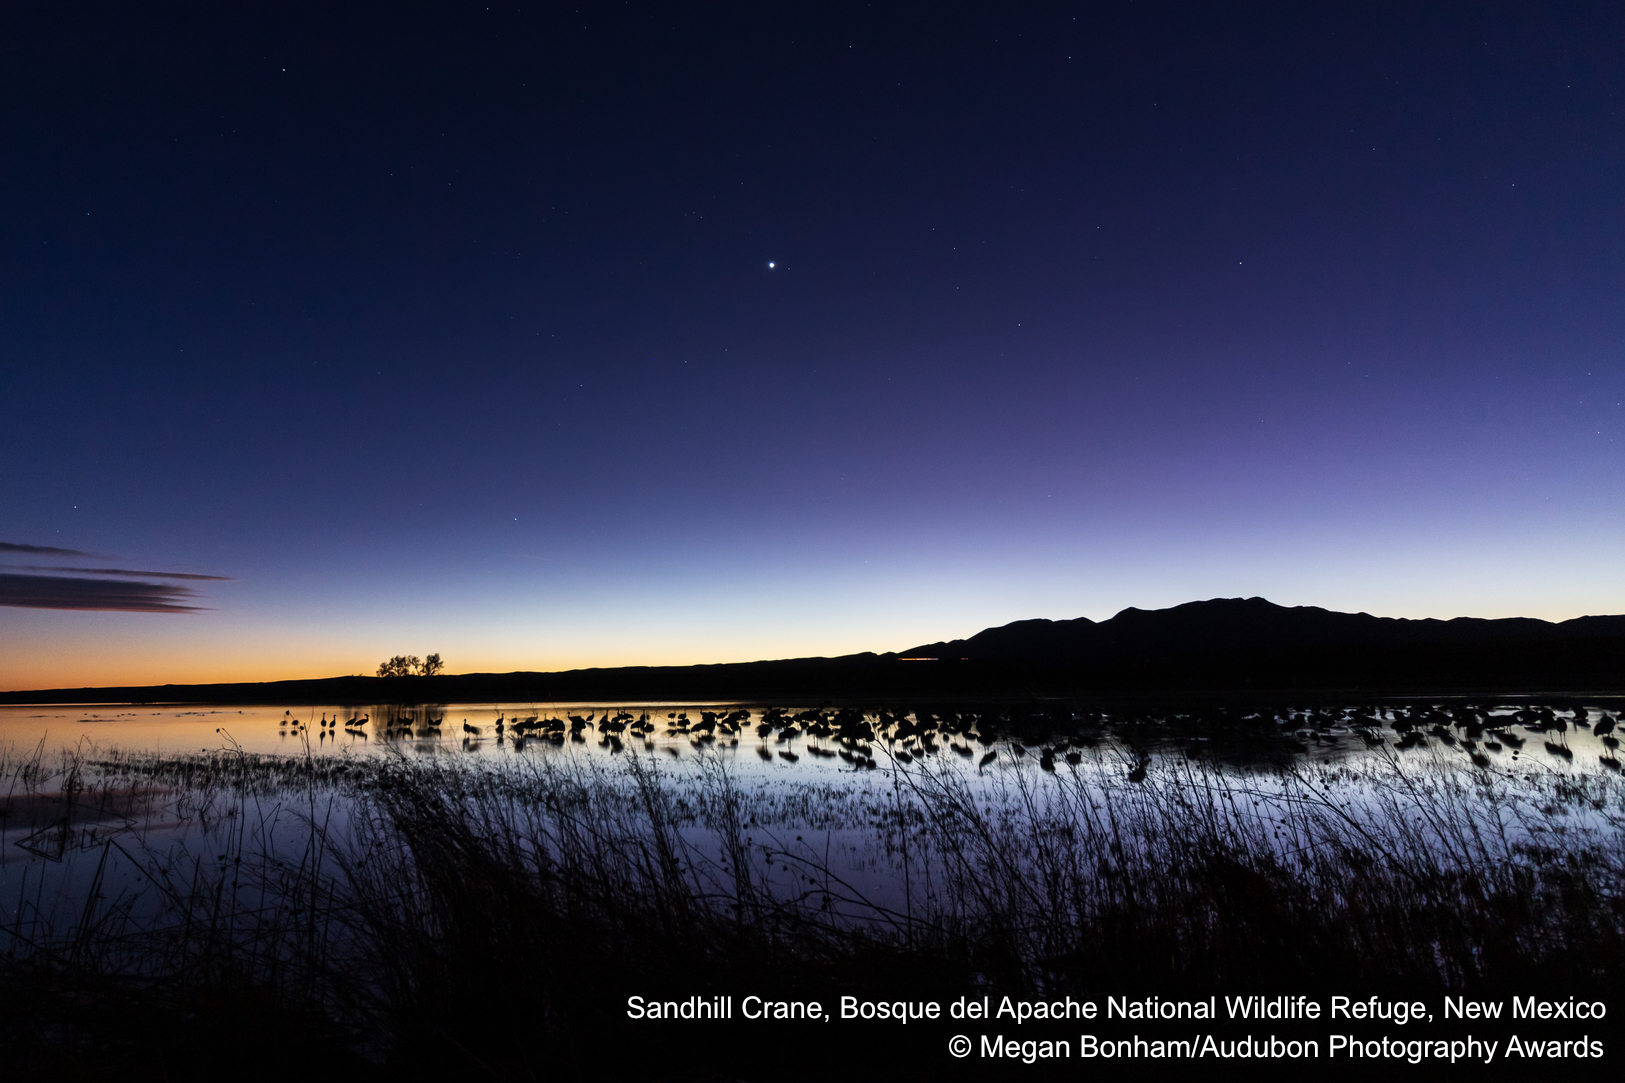 Sandhill Crane at Bosque del Apache National Wildlife Refuge, New Mexico. Photo credit: Megan Bonham/Audubon Photography Awards.